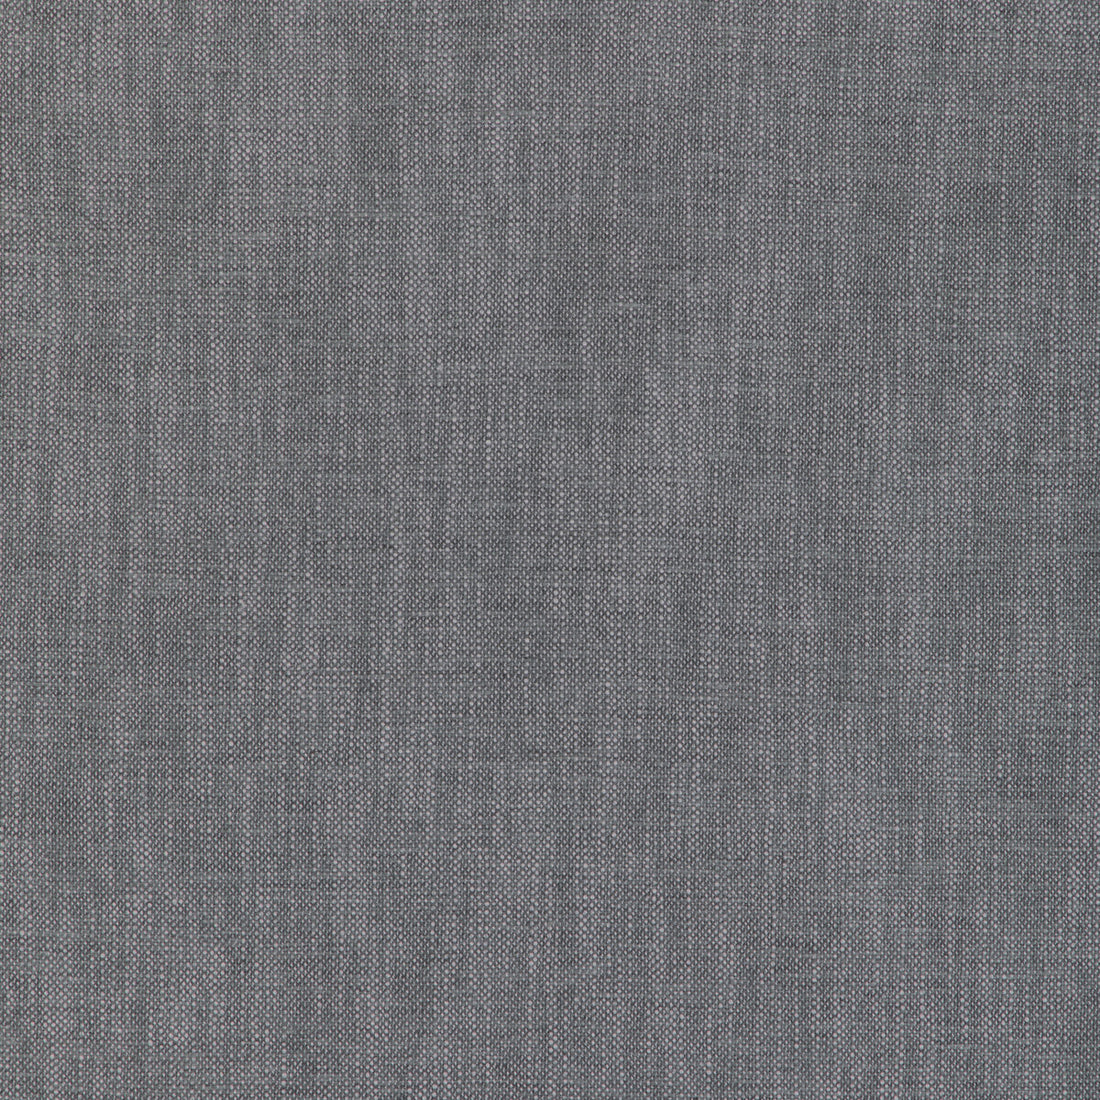 Kravet Smart fabric in 36672-11 color - pattern 36672.11.0 - by Kravet Smart in the Performance Kravetarmor collection